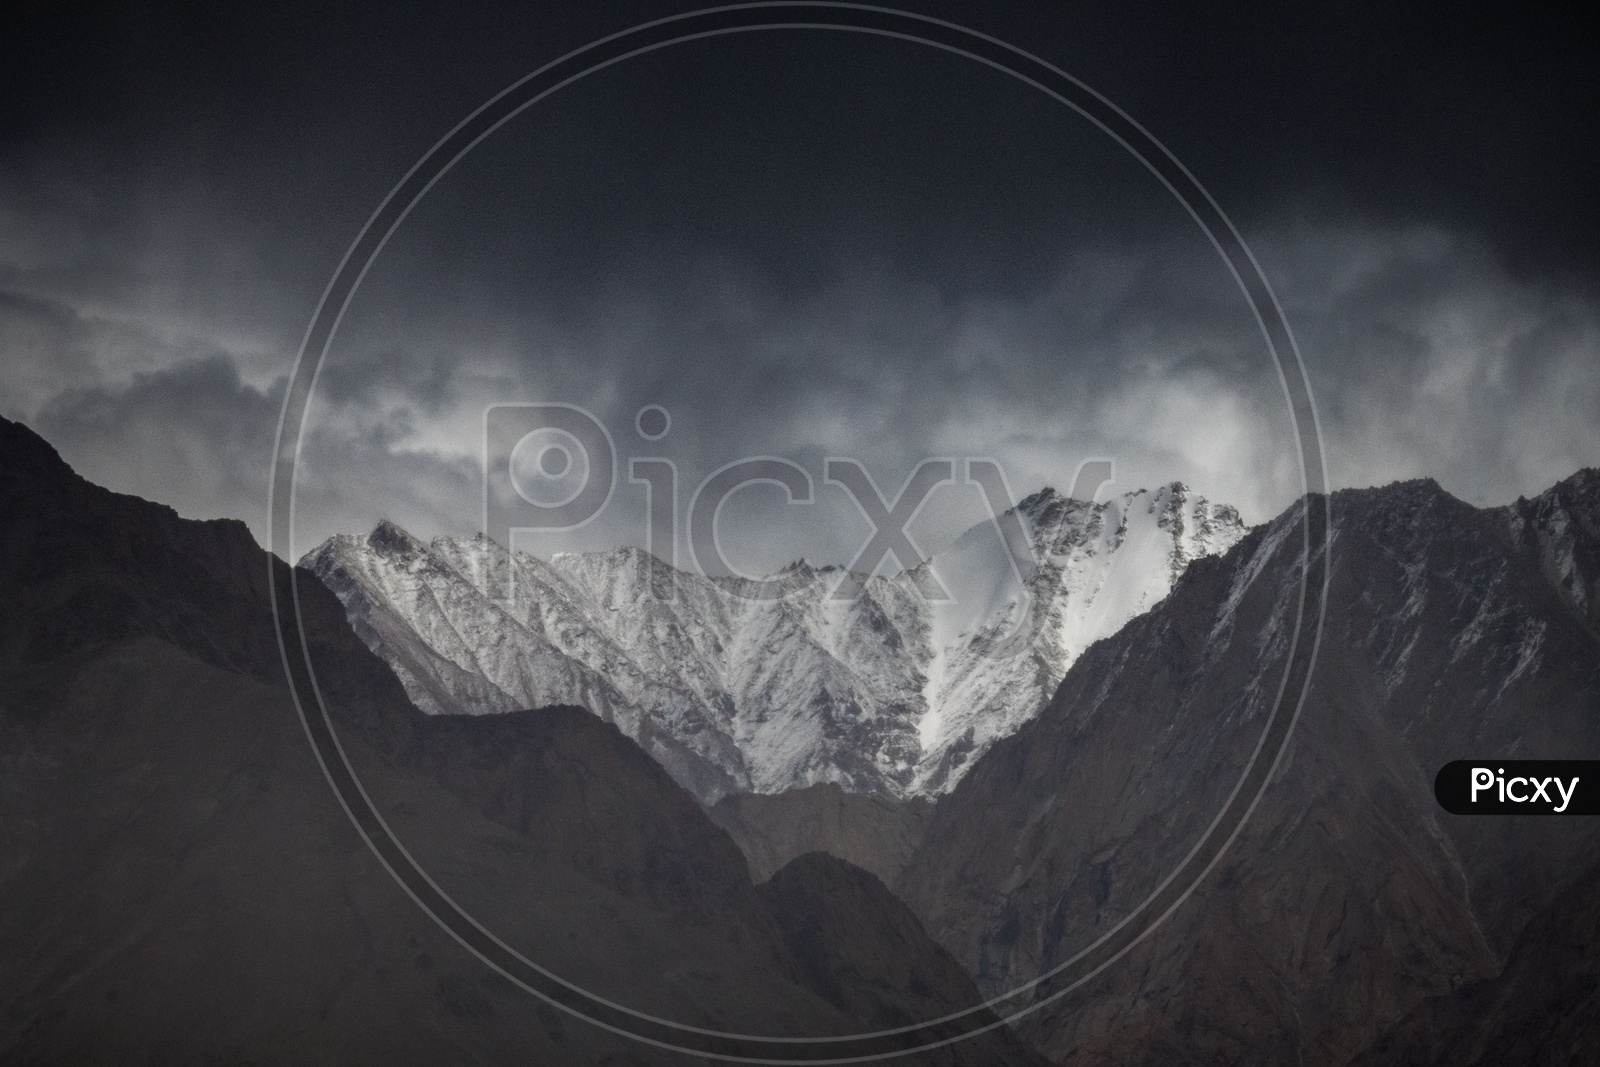 Snow Capped  Mountains in Leh Ladakh region